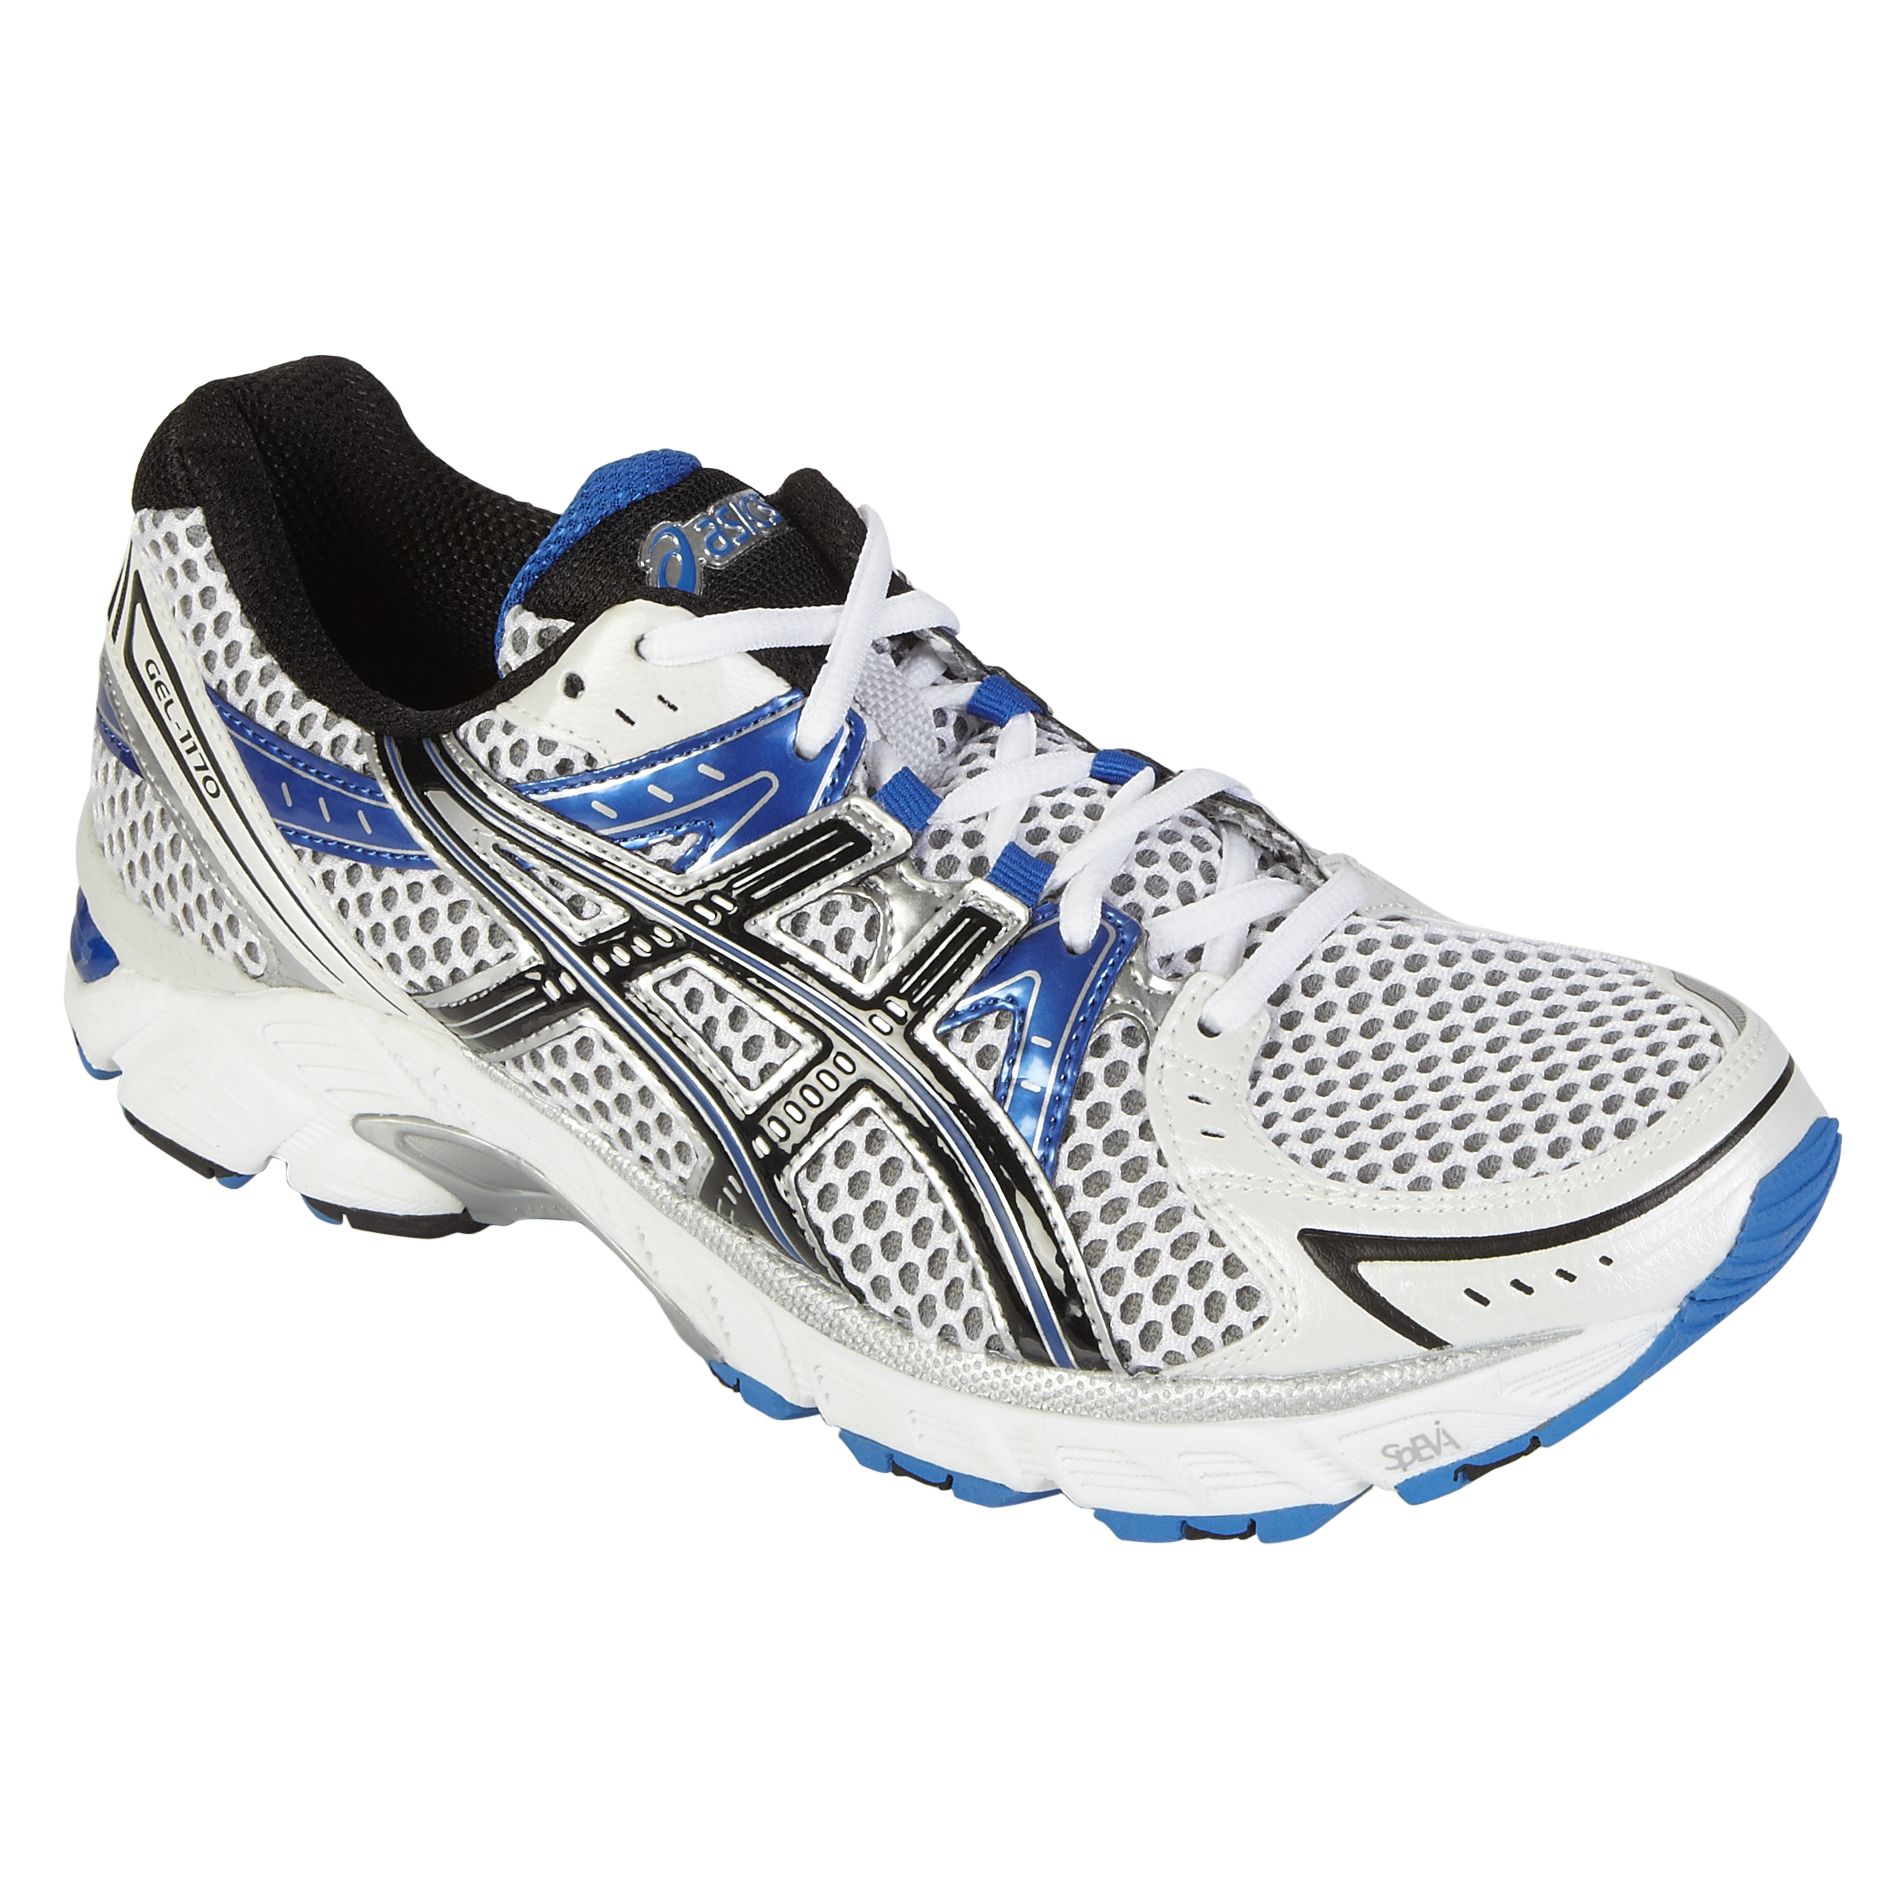 ASICS Men's GEL-1170 Running Athletic Shoe Medium, Wide, Extra Wide - White/Blue/Black